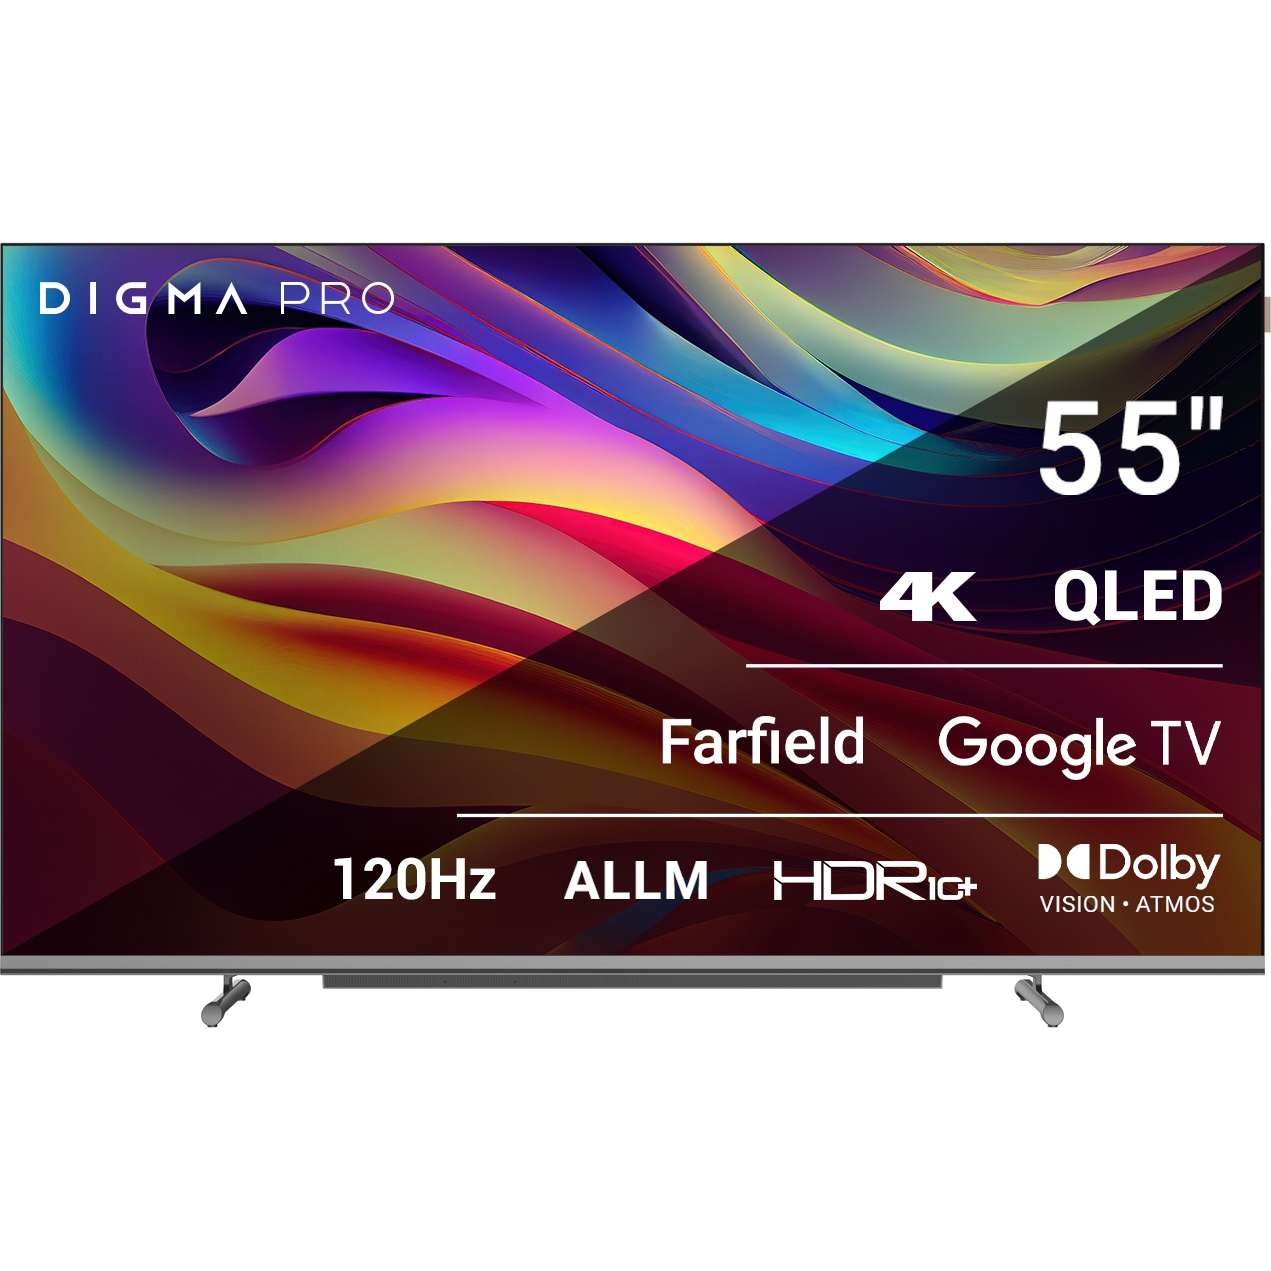 Телевизор Digma Pro 55 55L телевизор digma pro qled 55l google tv frameless черный серебристый